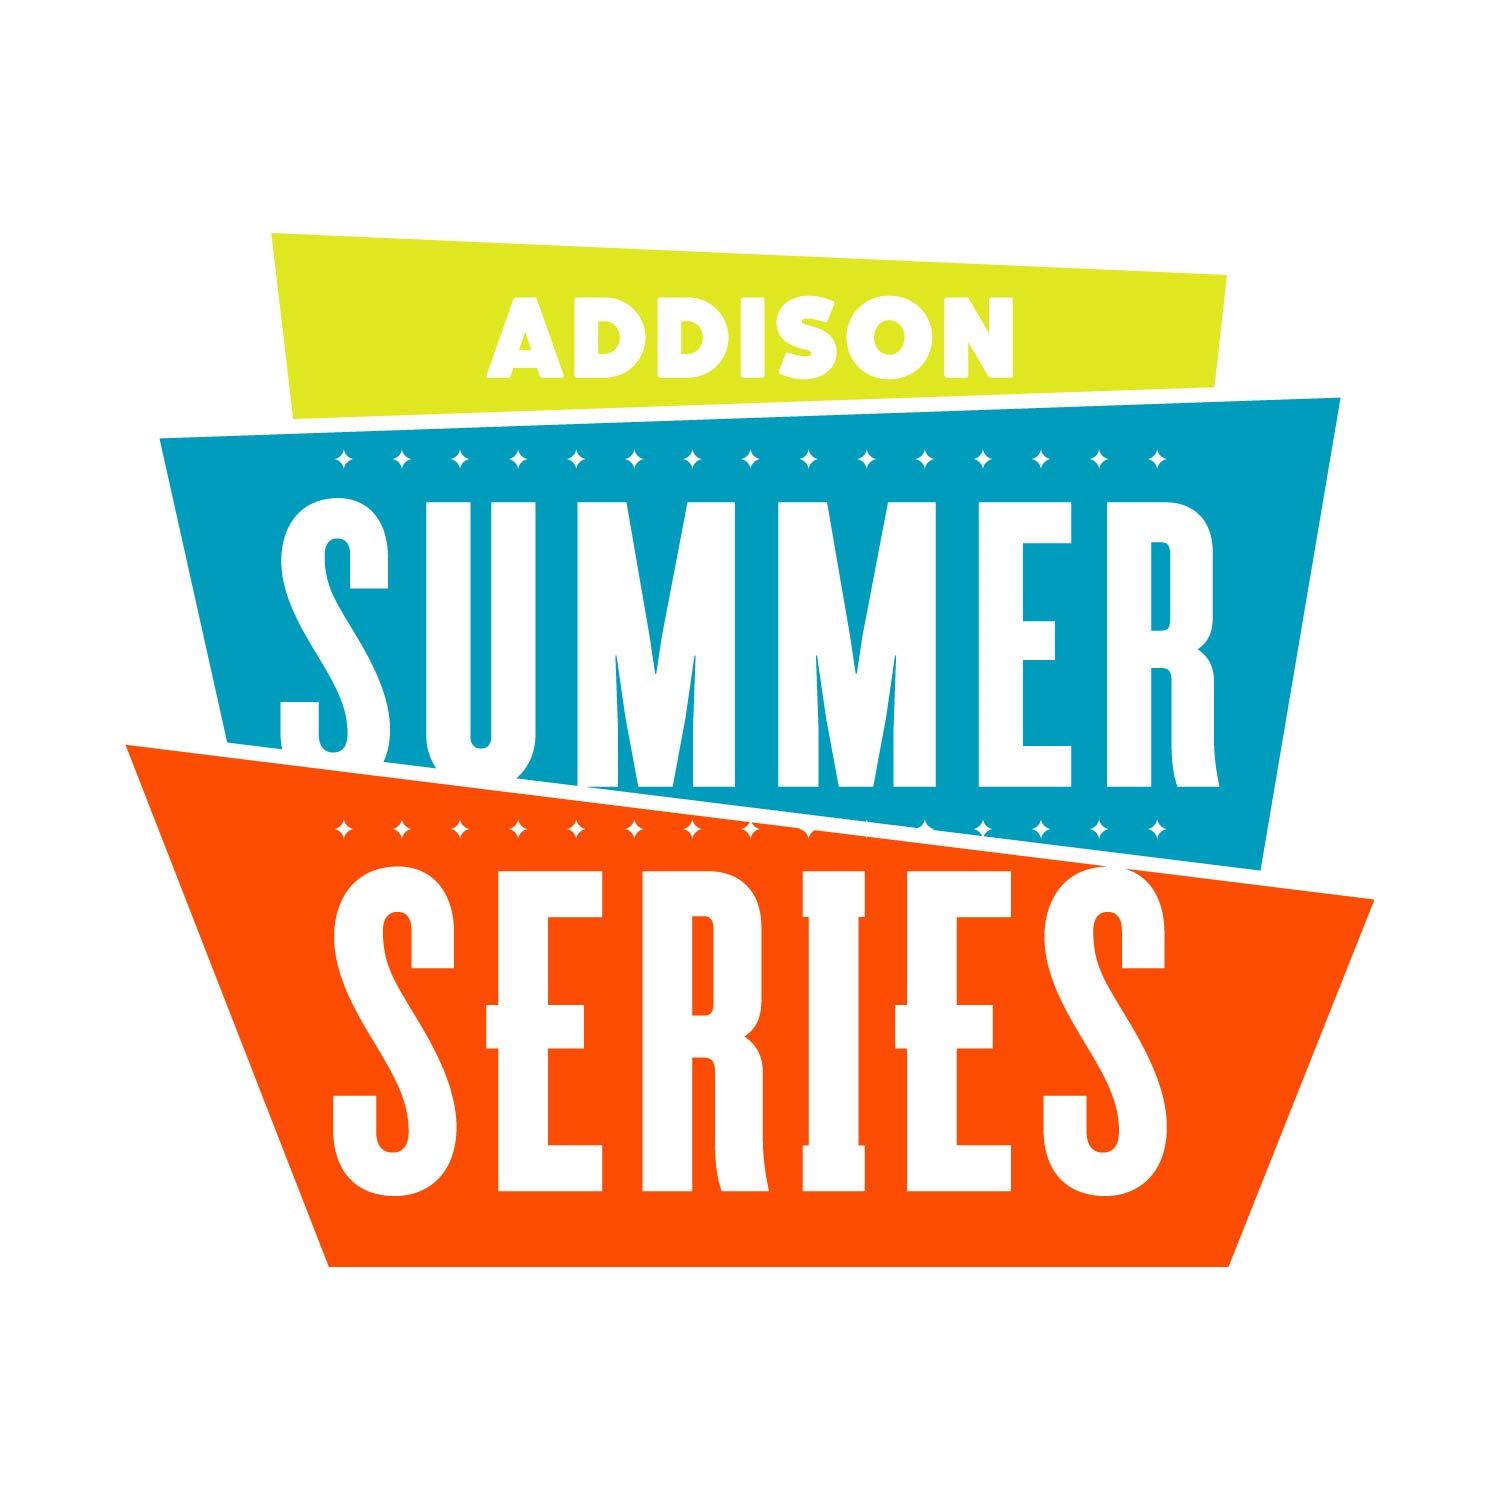 Addison Summer Series